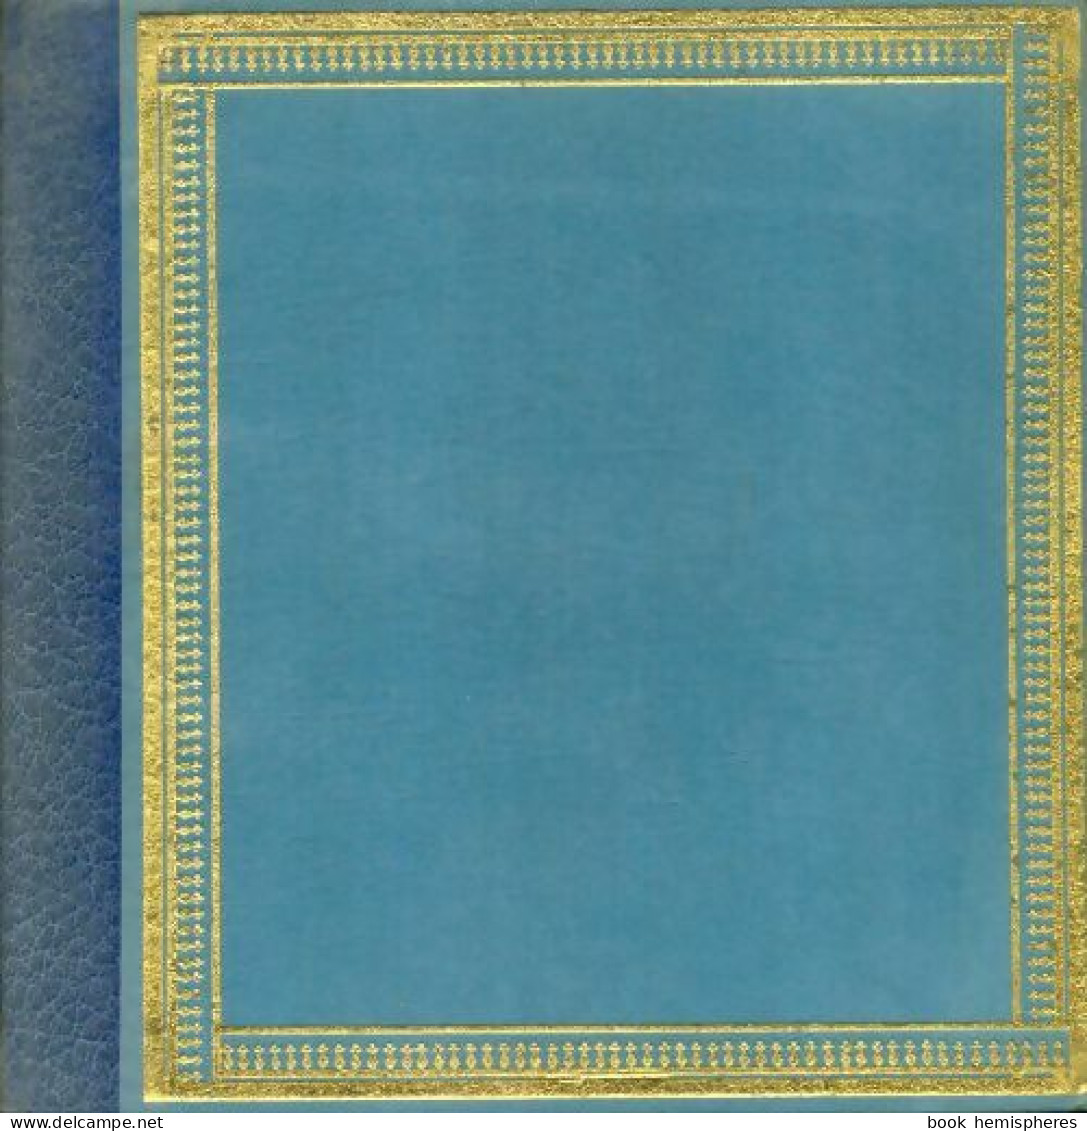 Histoire De France Tome I (0) De Jules Michelet - History